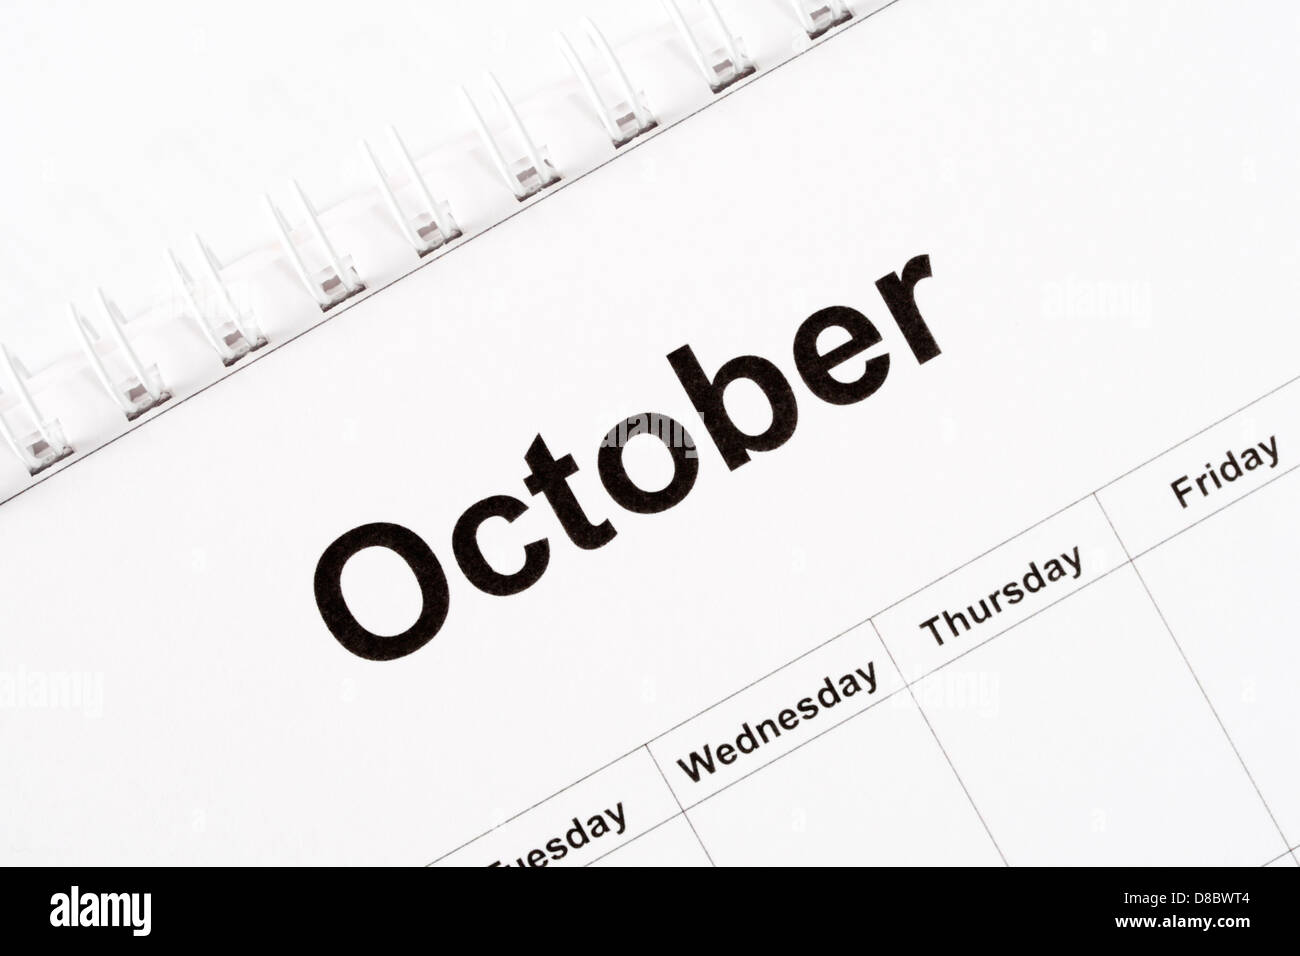 Calendar month of October Stock Photo